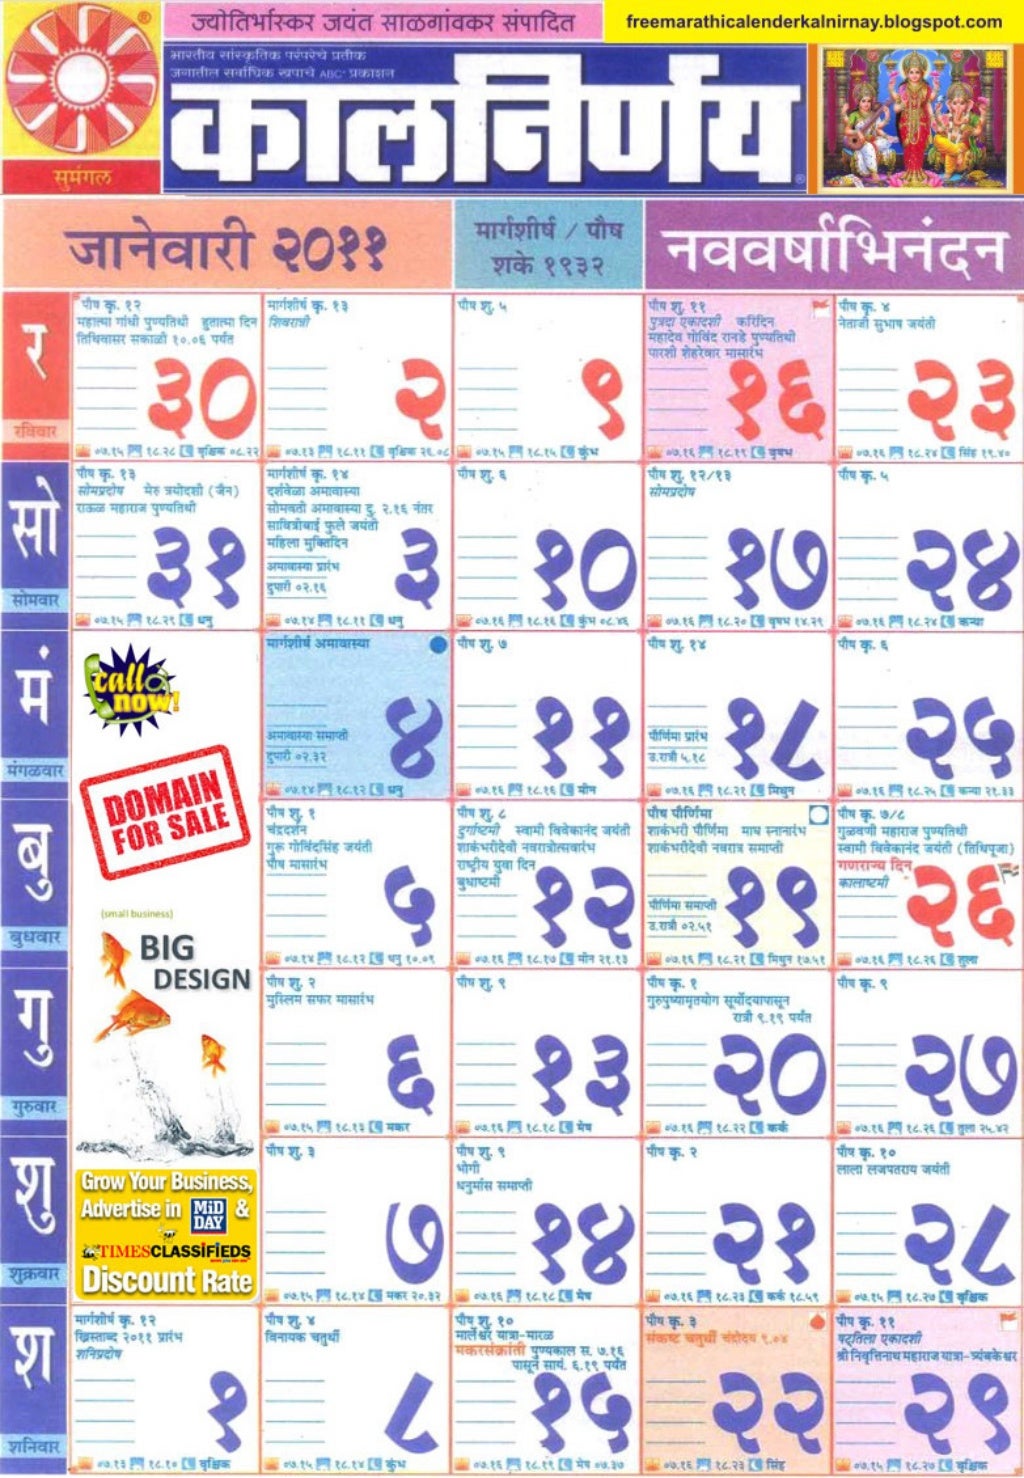 april-2022-calendar-marathi-kalnirnay-zona-de-informaci-n